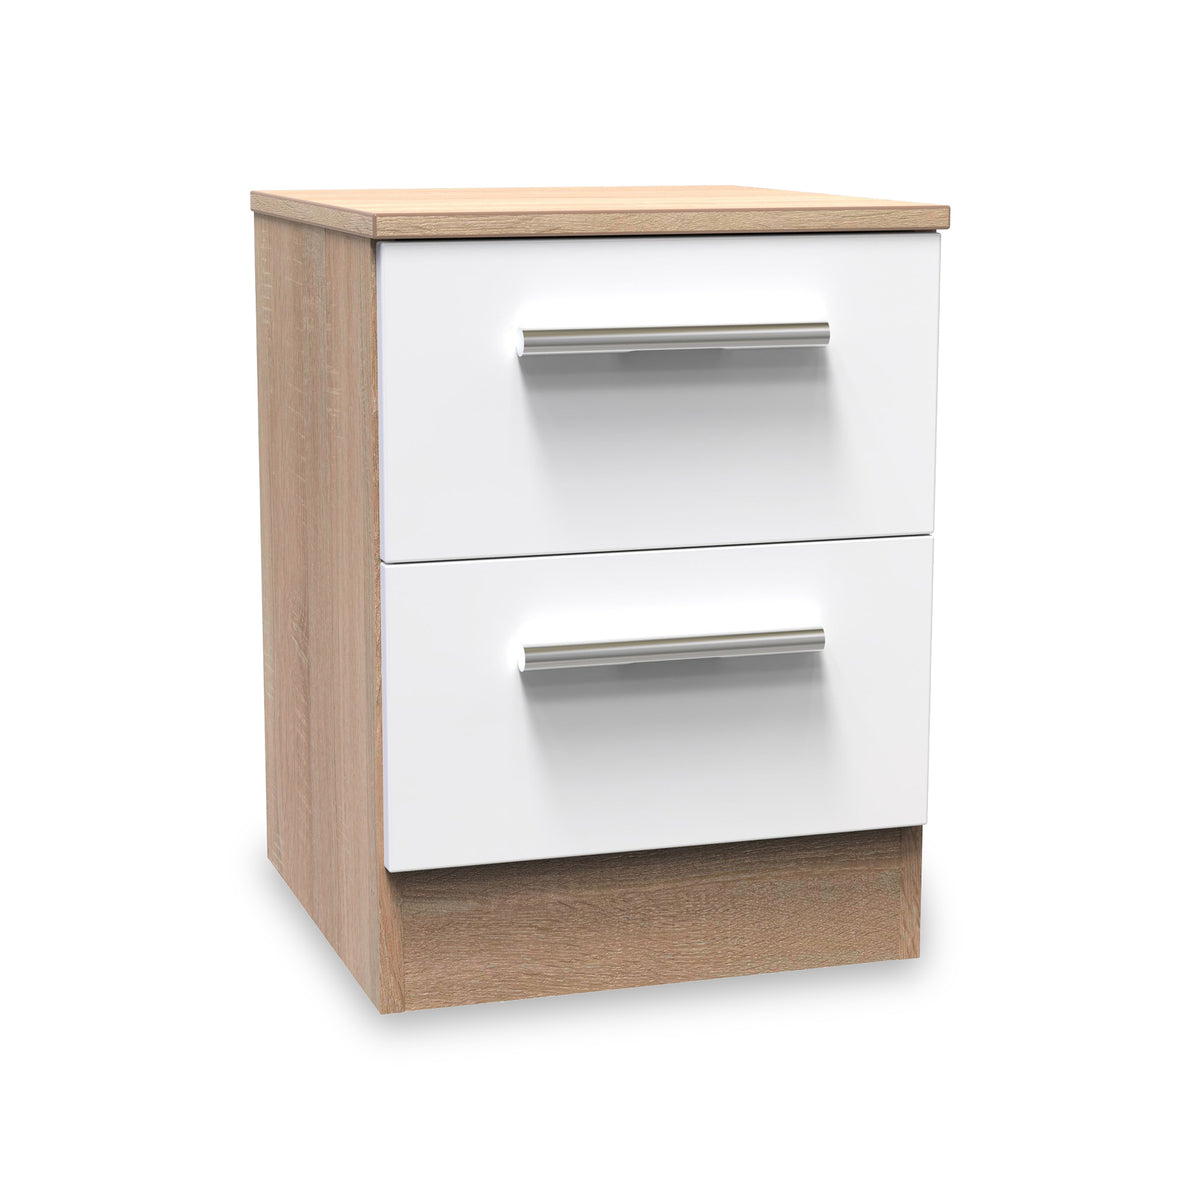 Blakely White Oak Bardolino 2 Drawer Bedside Cabinet from Roseland Furniture